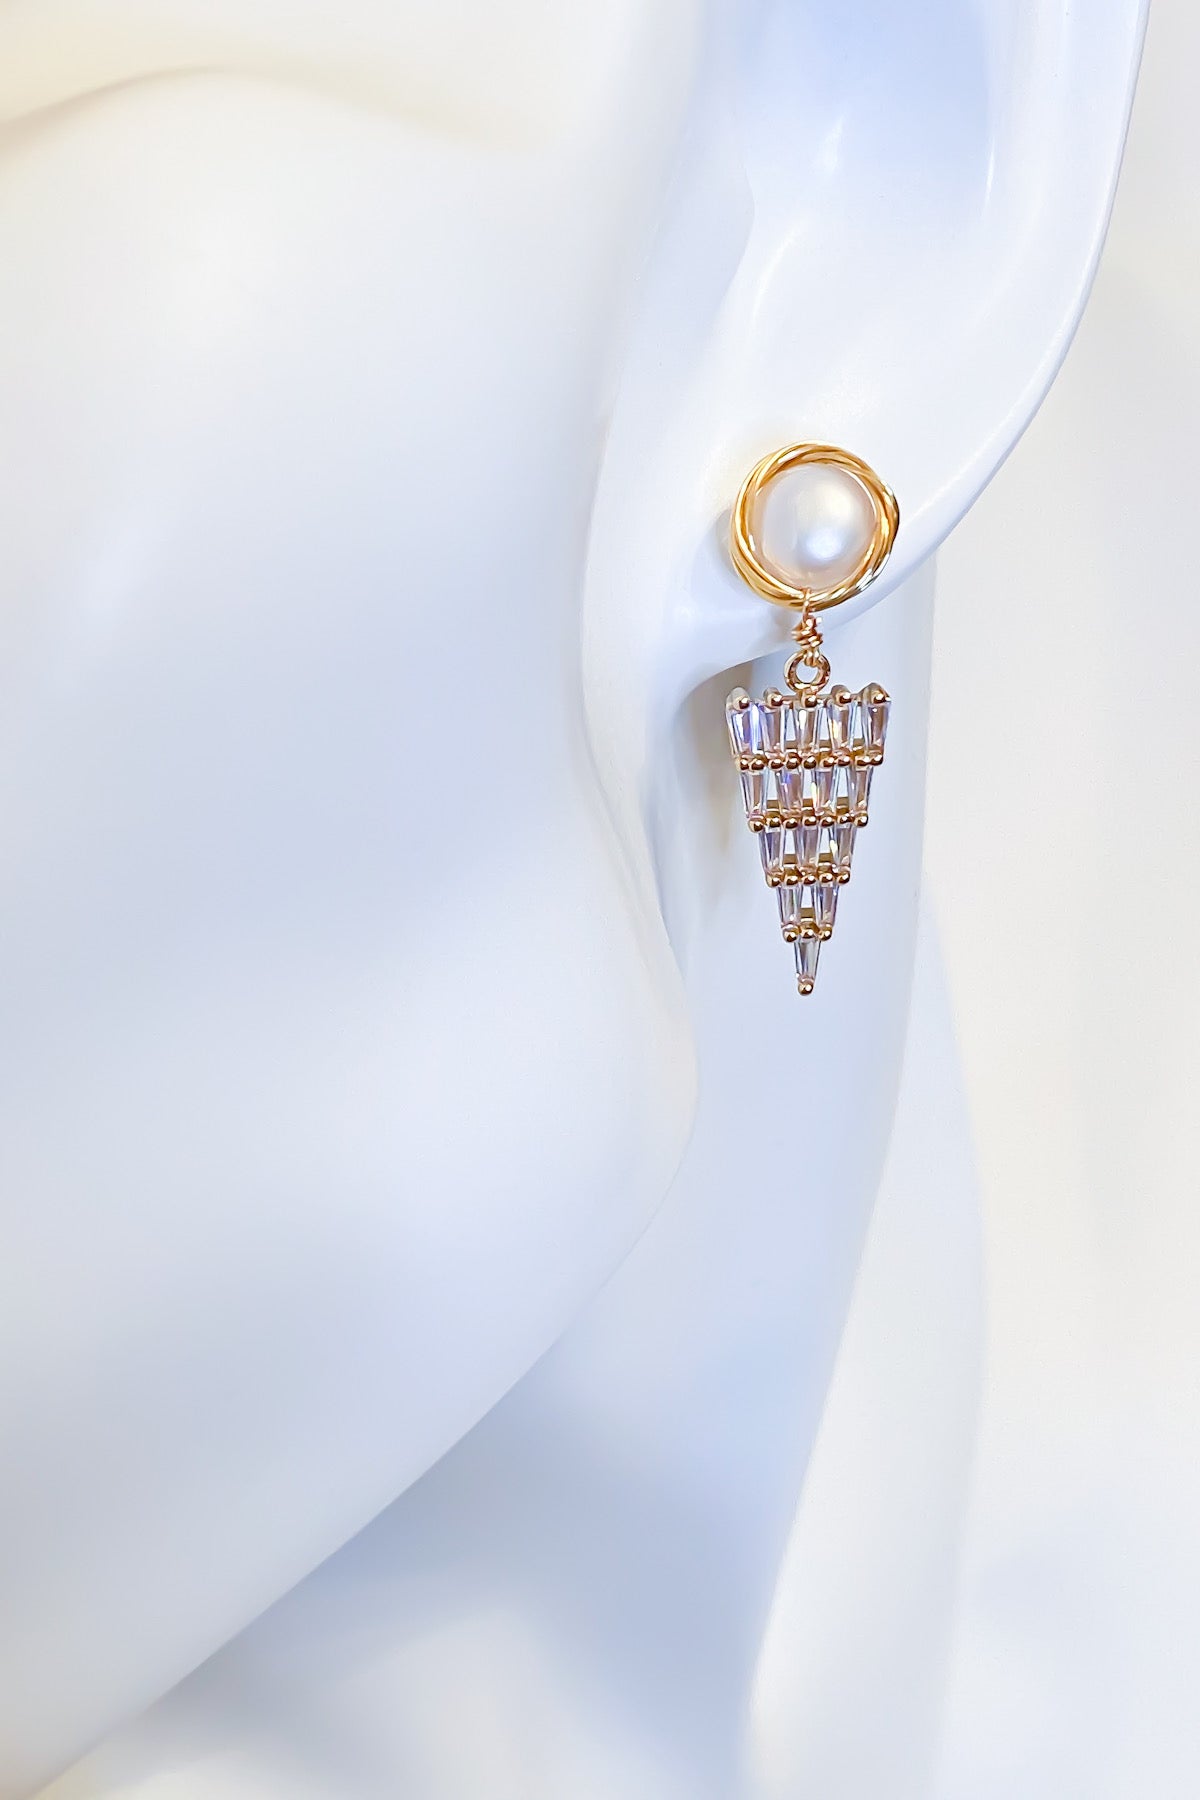 SKYE San Francisco Shop Chic Modern Elegant Classy Women Jewelry French Parisian Minimalist Ella Gold Pearl Crystal Drop Earrings 6